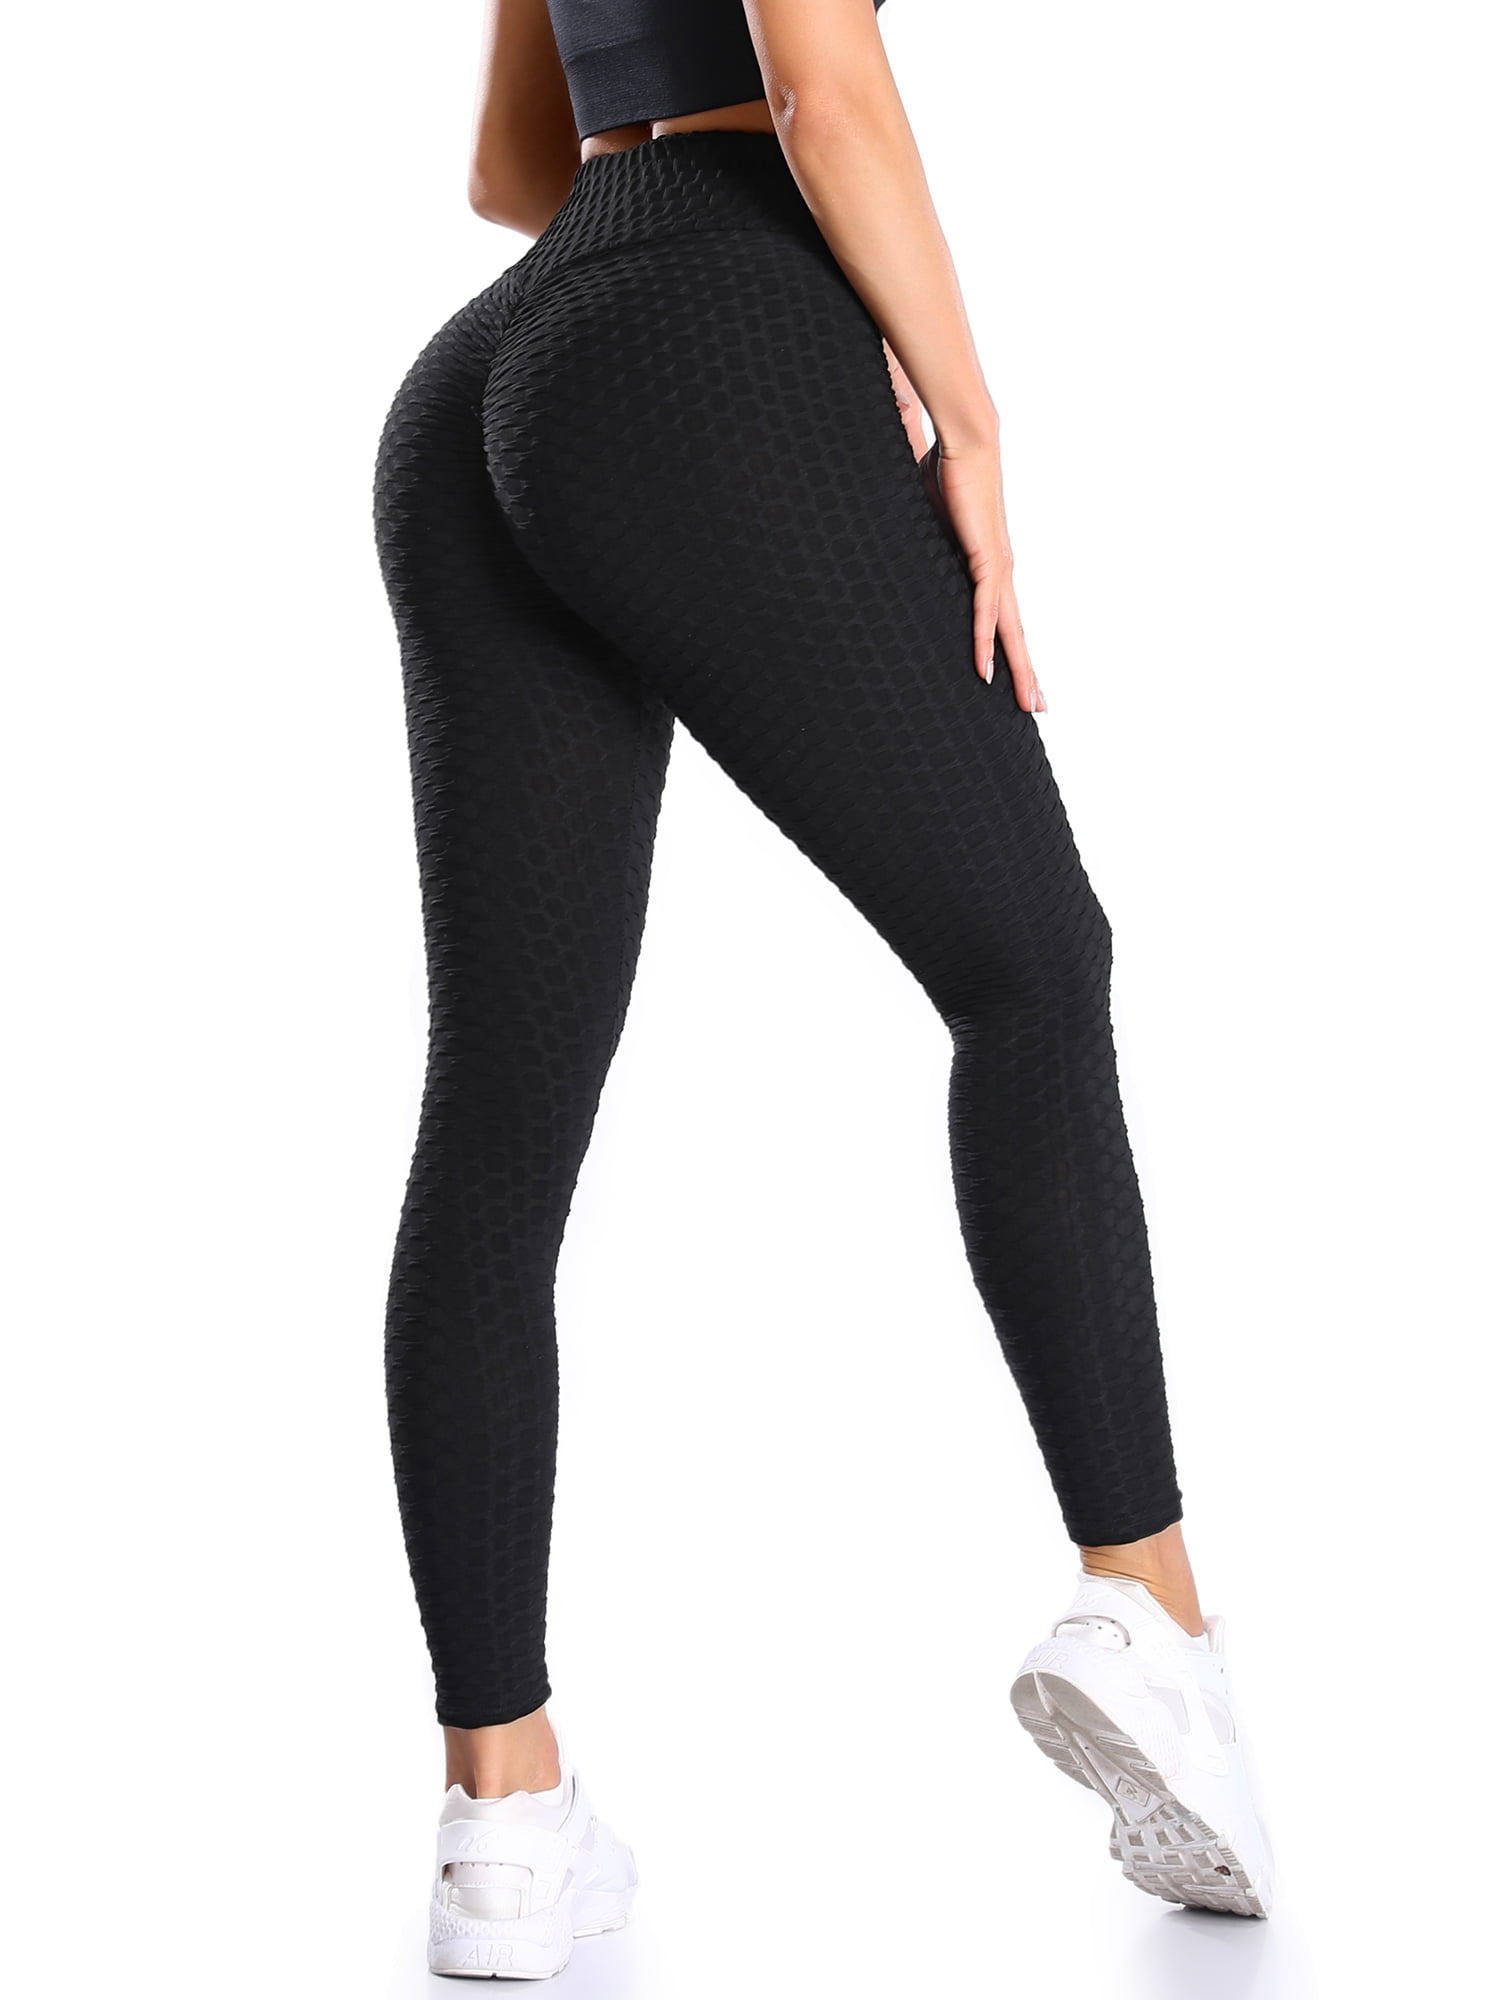 Women Push Up Honeycomb Anti-Cellulite Leggings Trouser High Waist Yoga Pants 